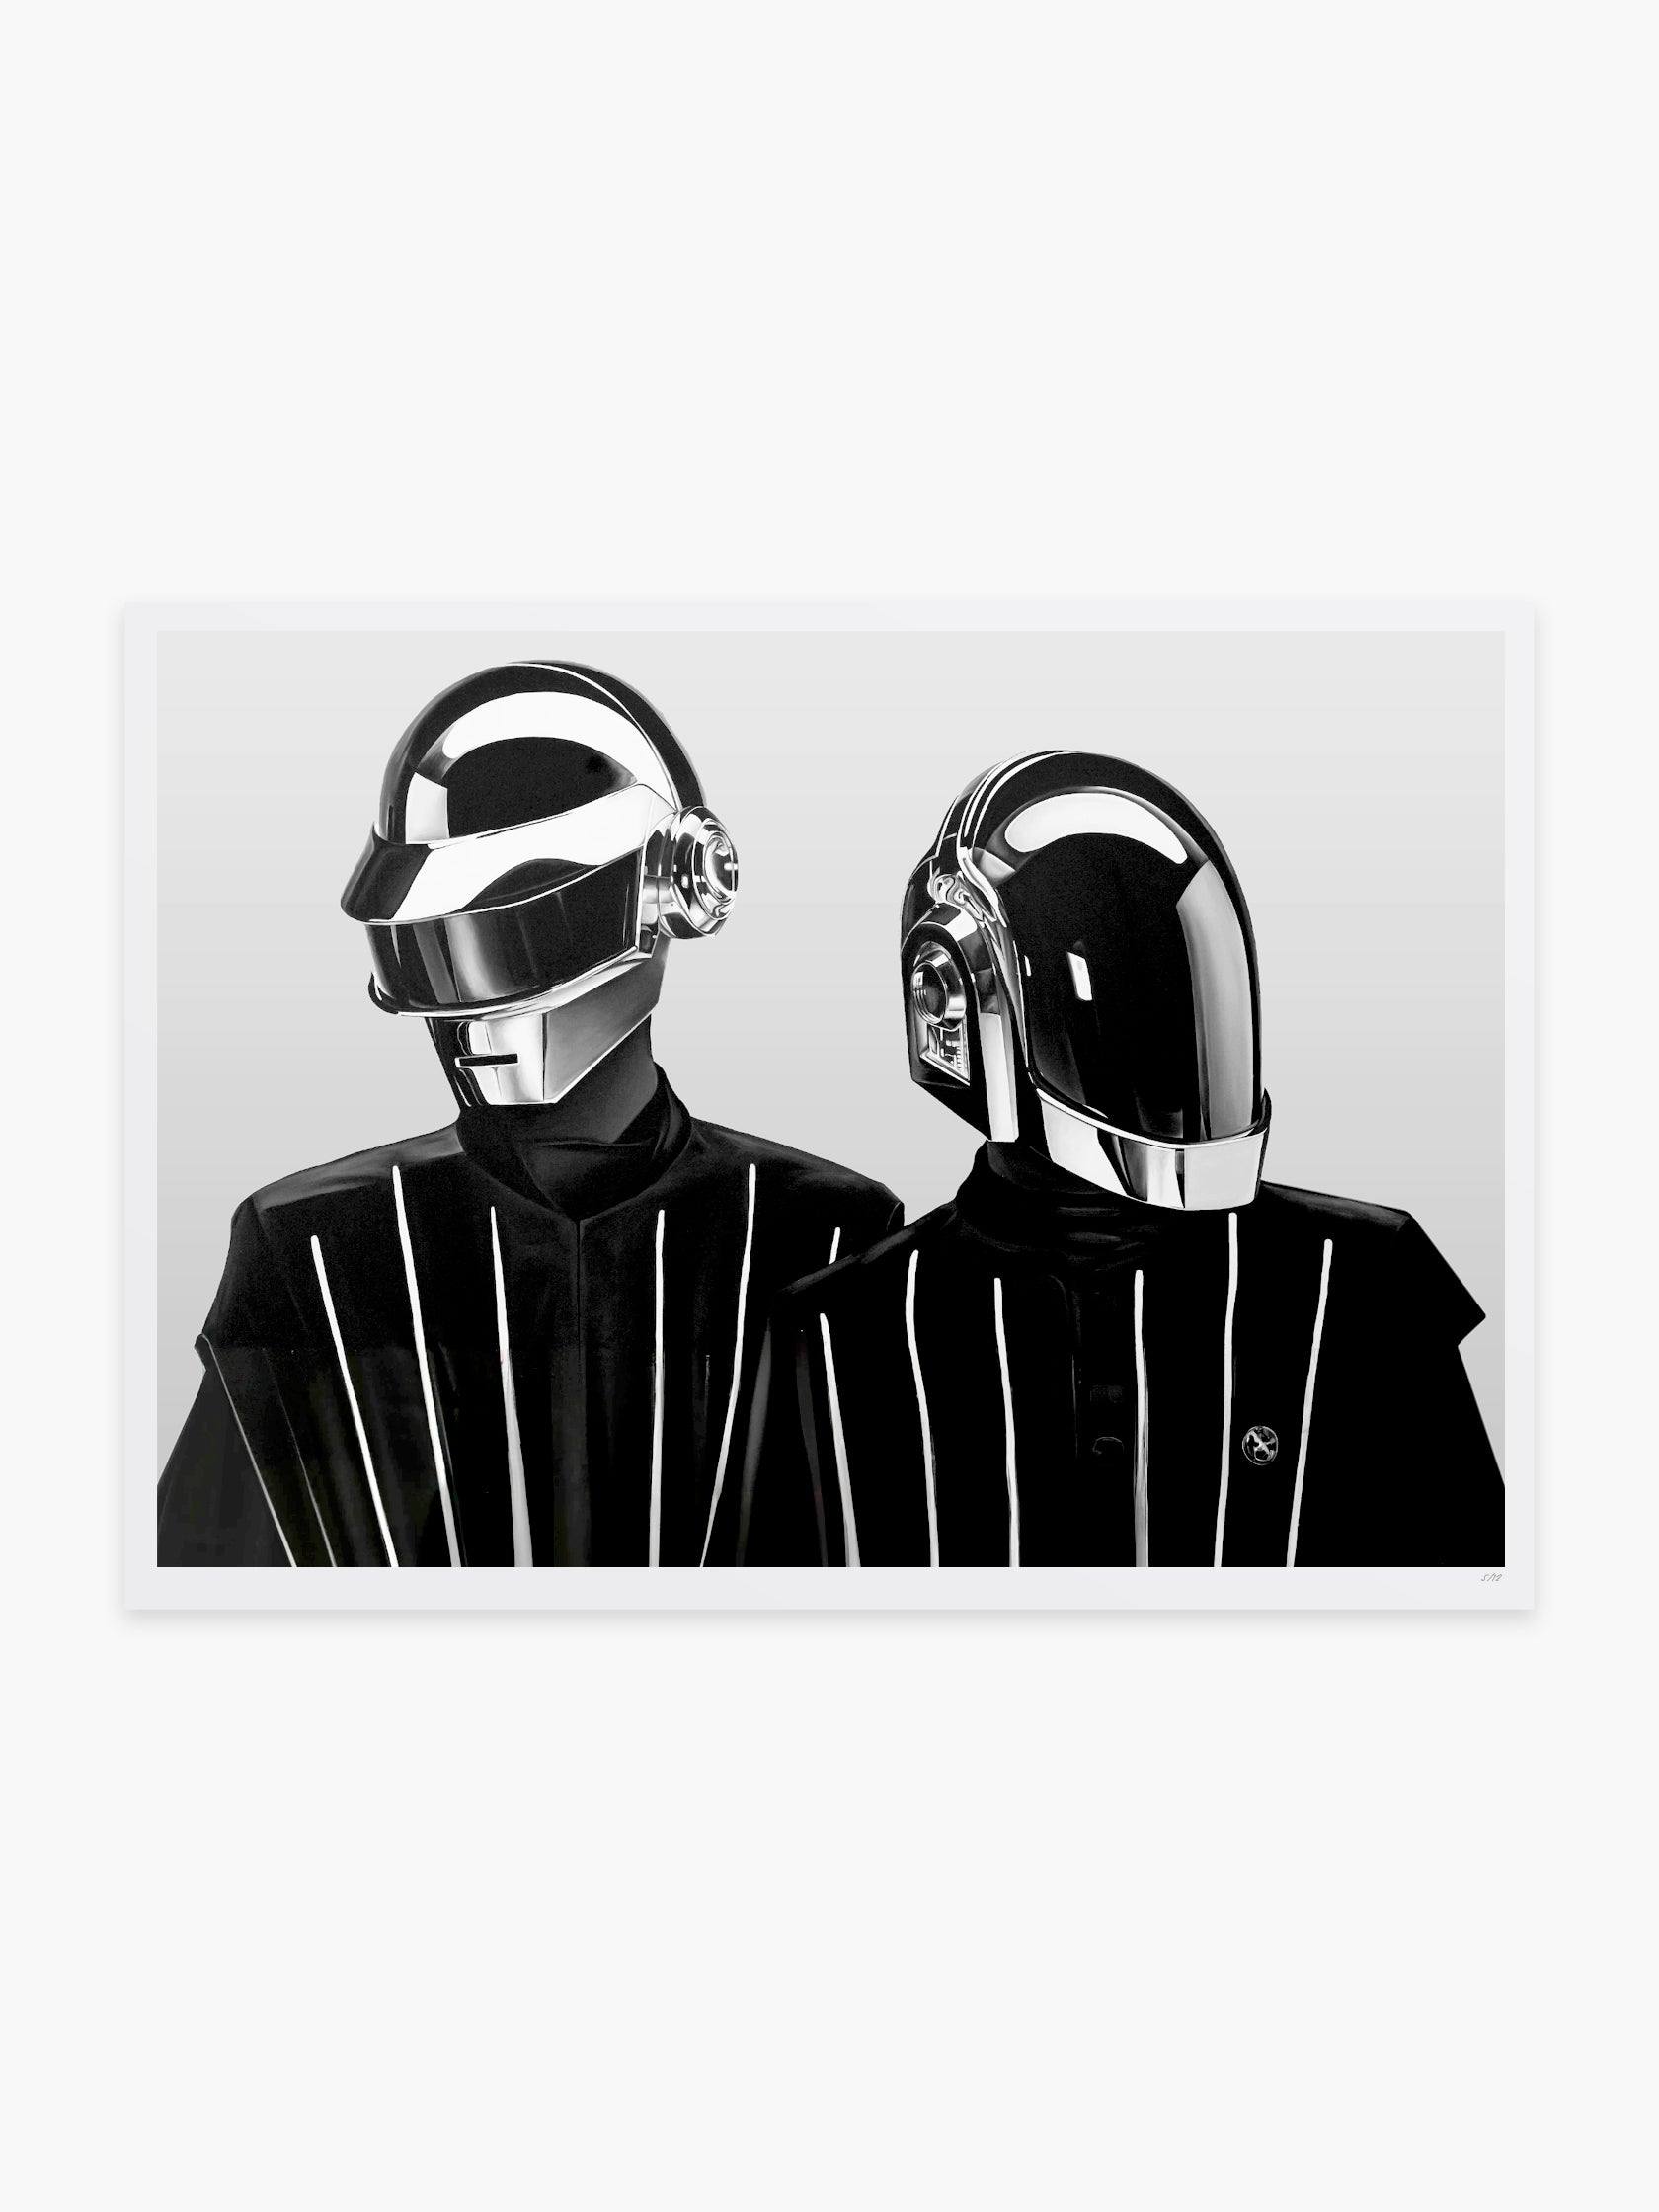 Daft Punk by Ricardo Rodriguez - Mankovsky Gallery